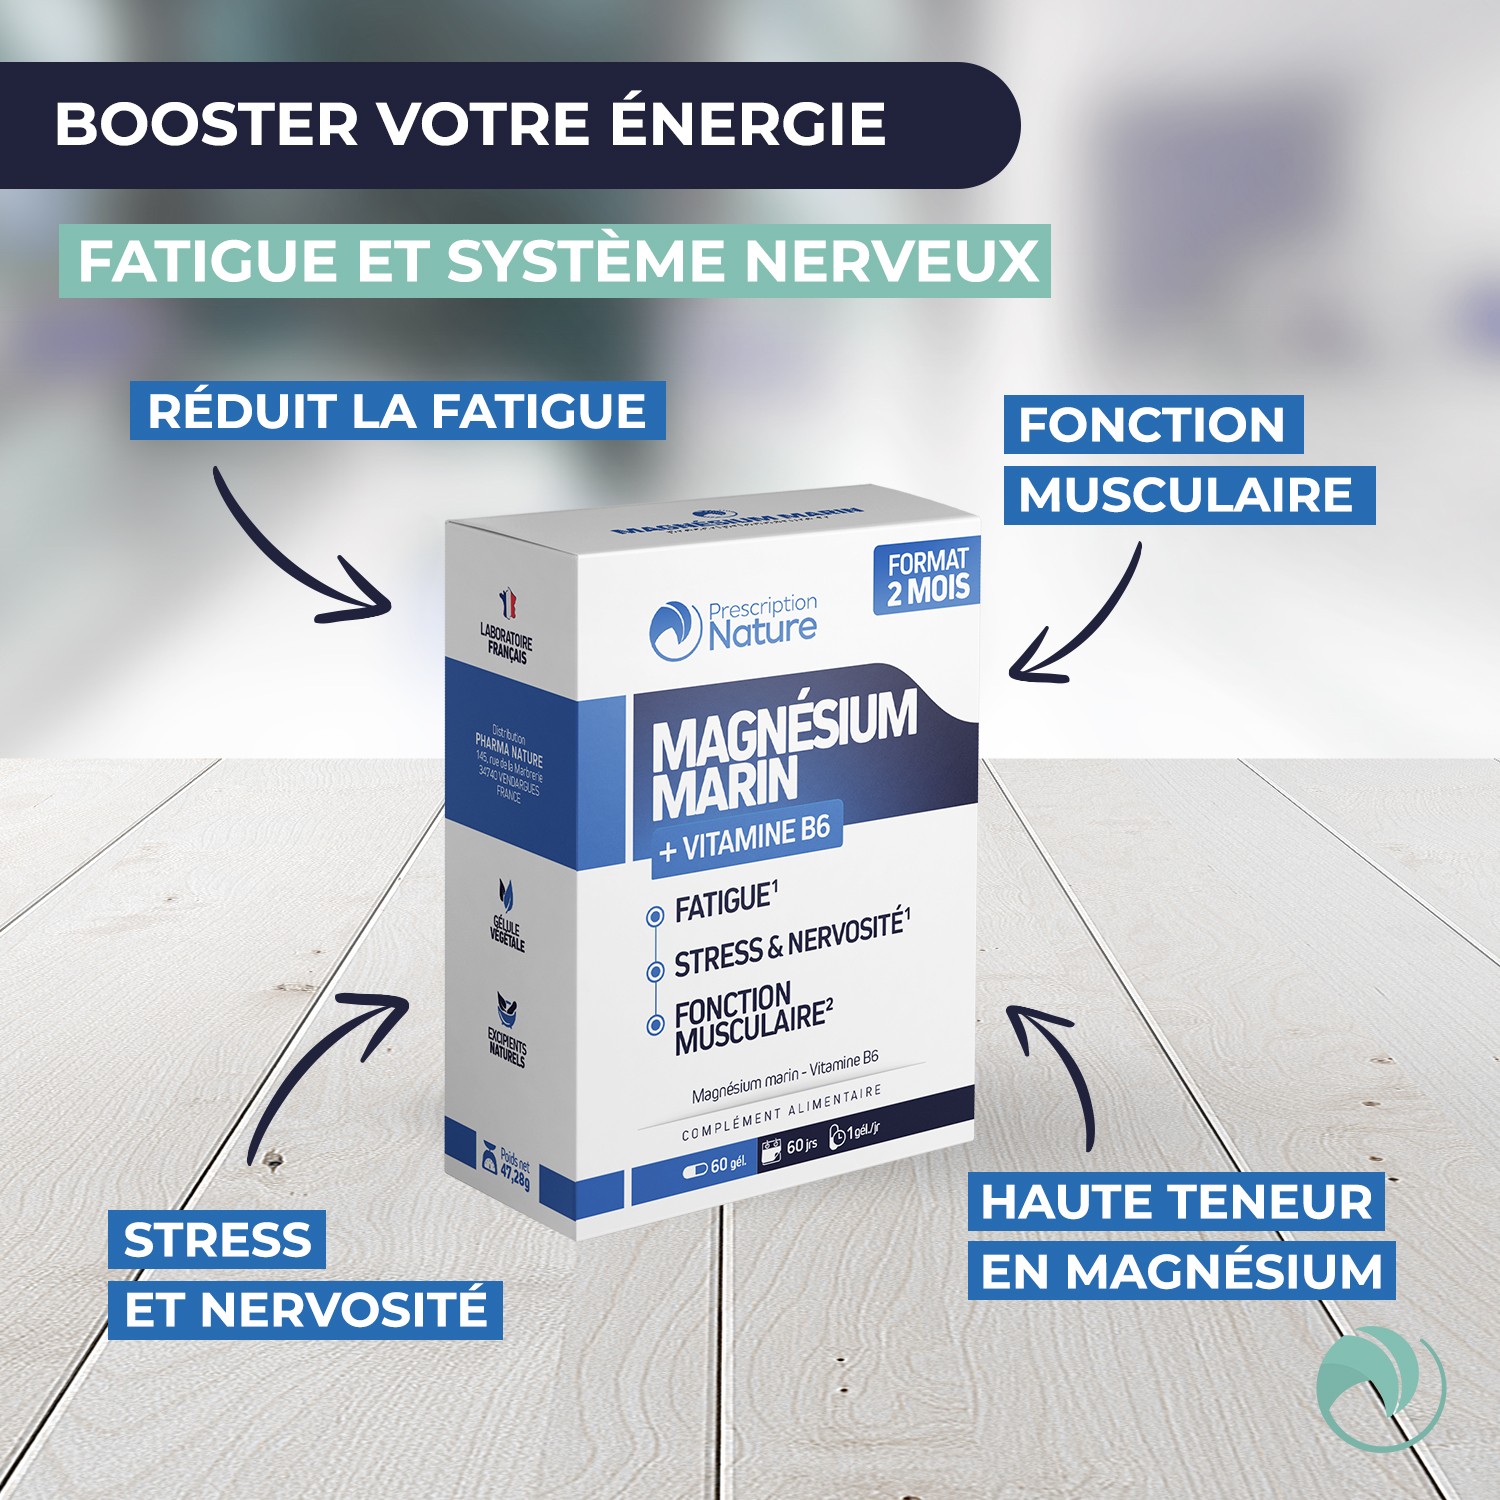 MAGNÉSIUM MARIN | Contribue à réduire la fatigue | Magnésium ...